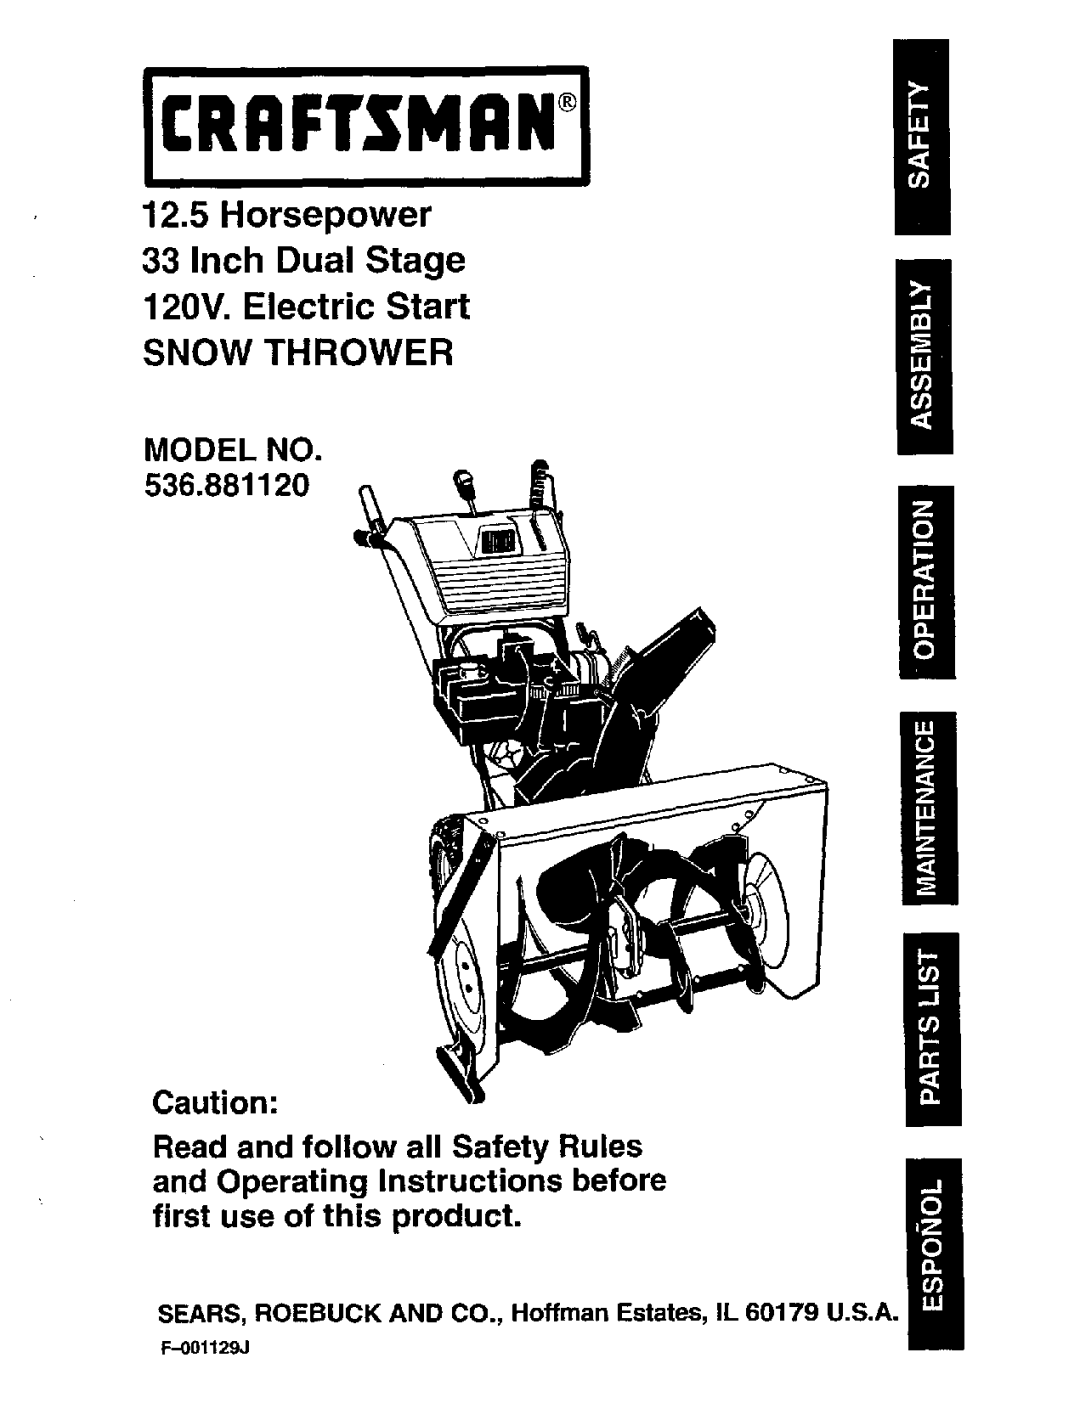 Craftsman 536.88112 operating instructions Snow Thrower, 001129J 